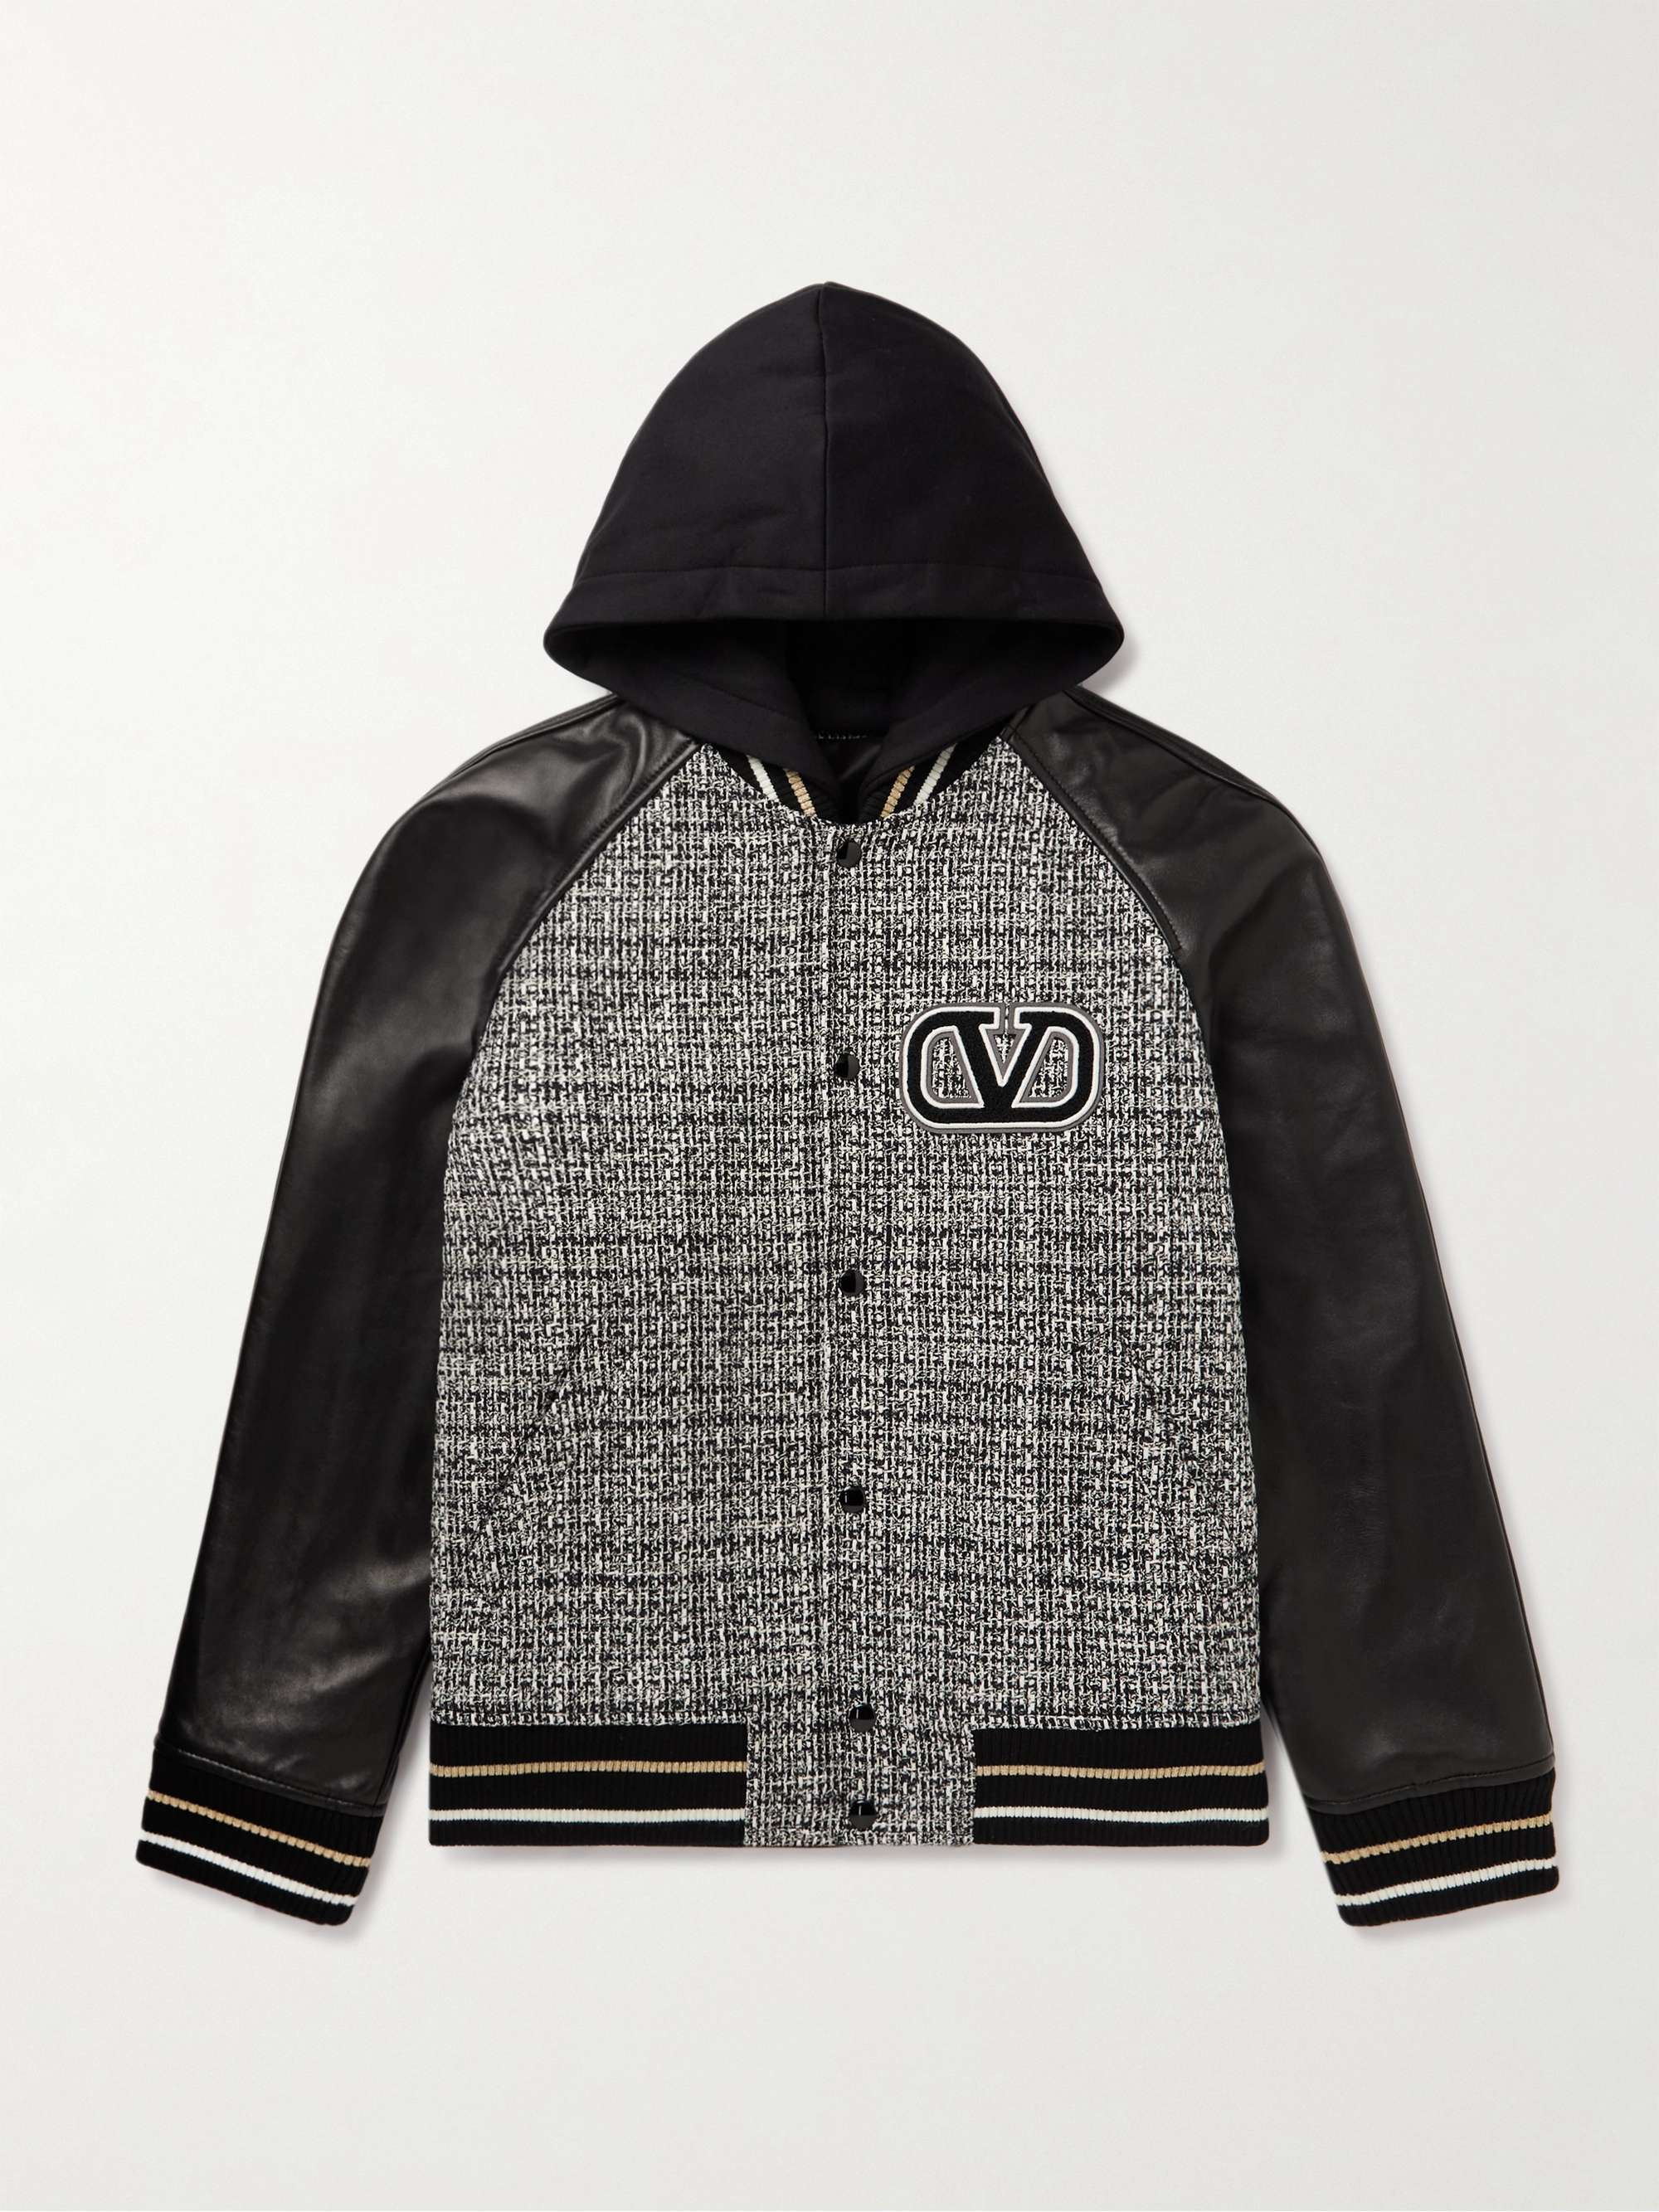 Louis Vuitton Suede Monogram Jacket